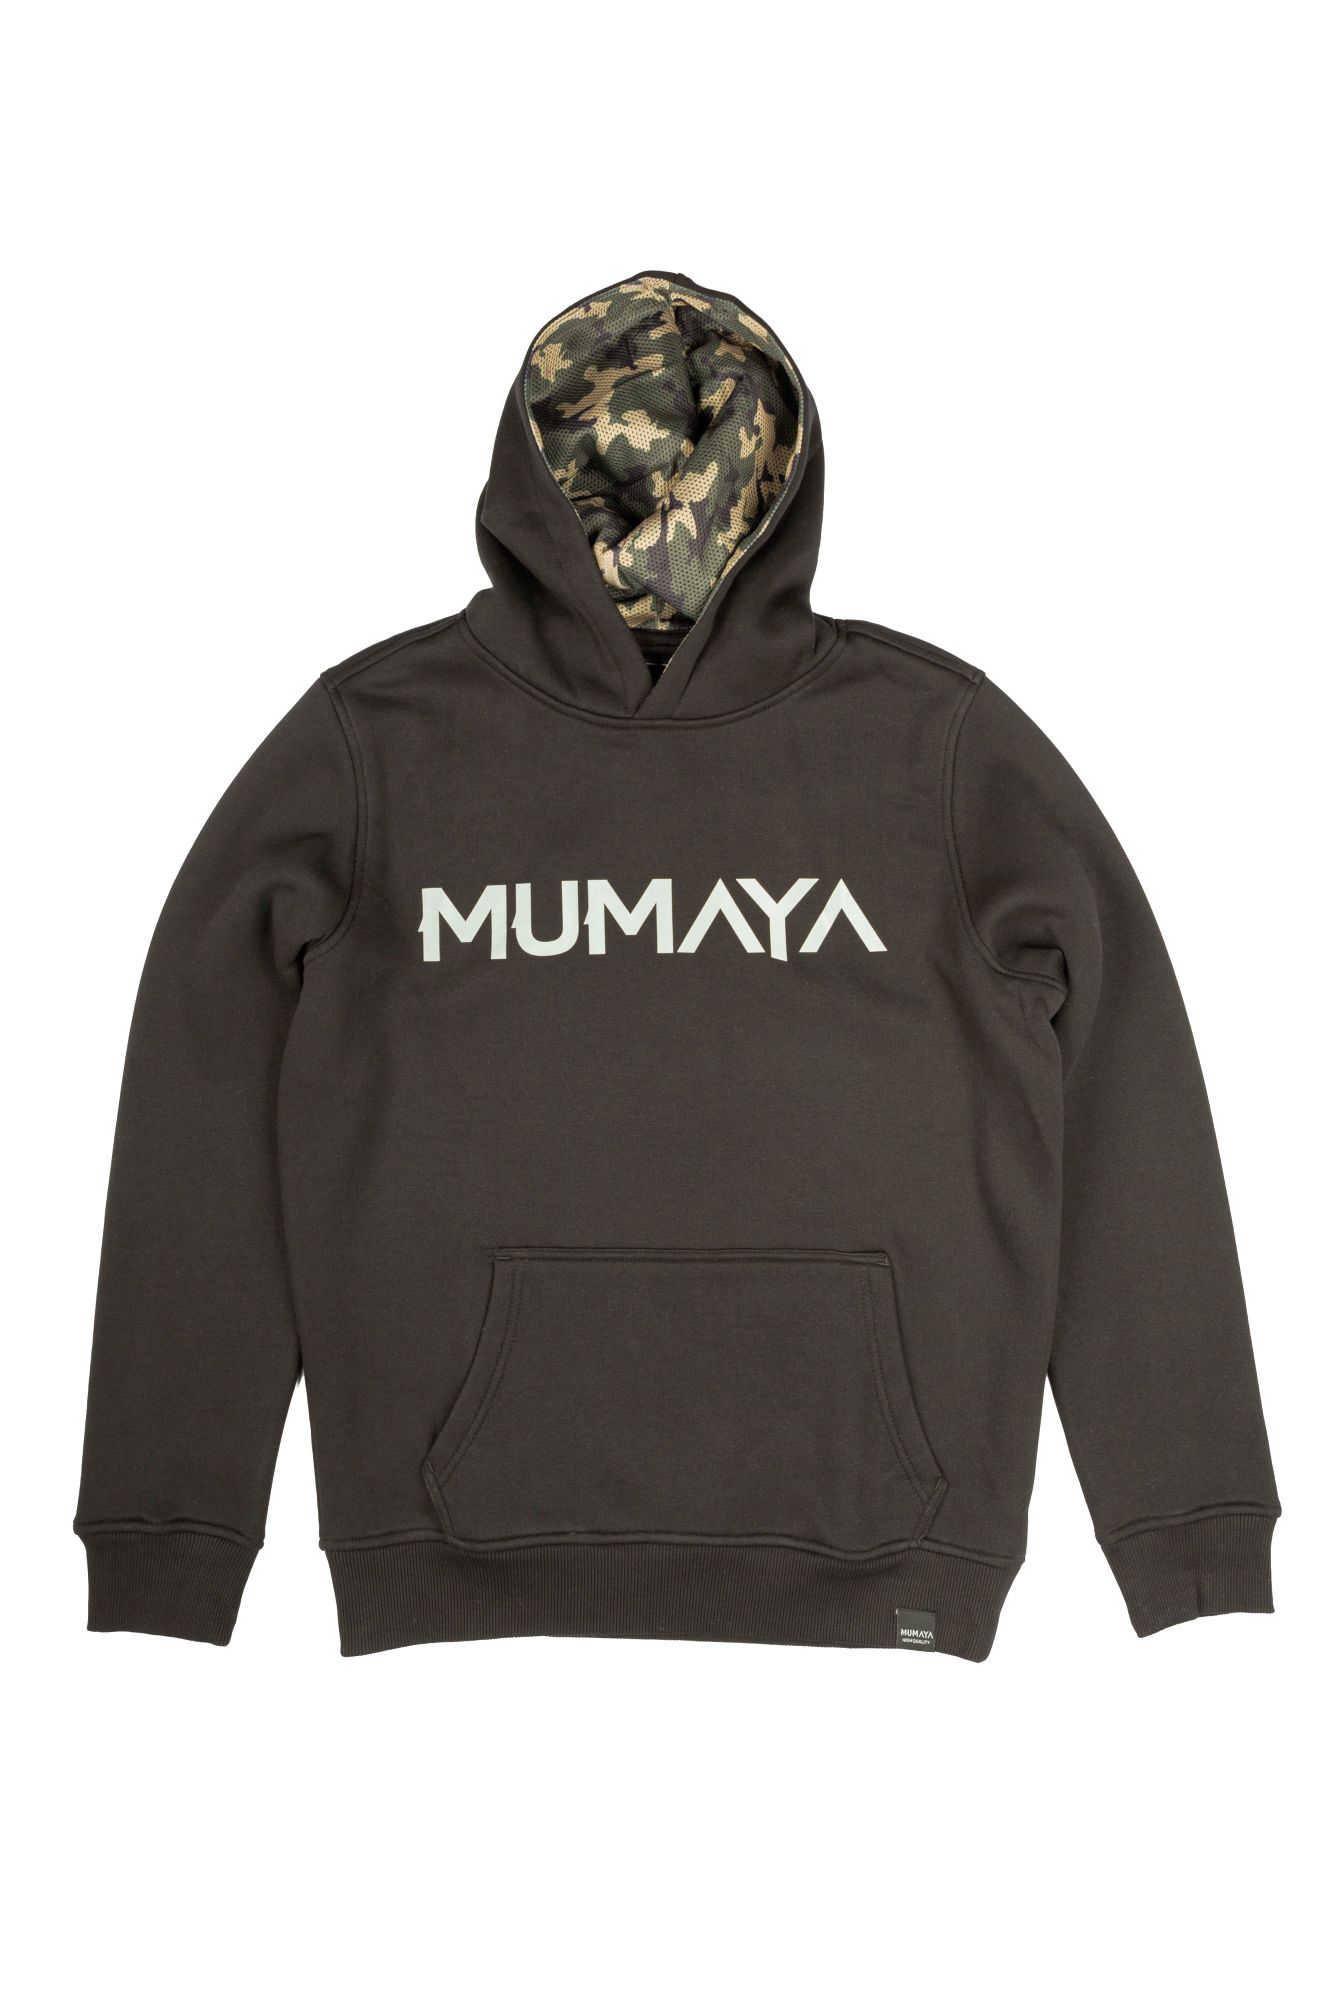 Mumaya Base-Line Hoodie